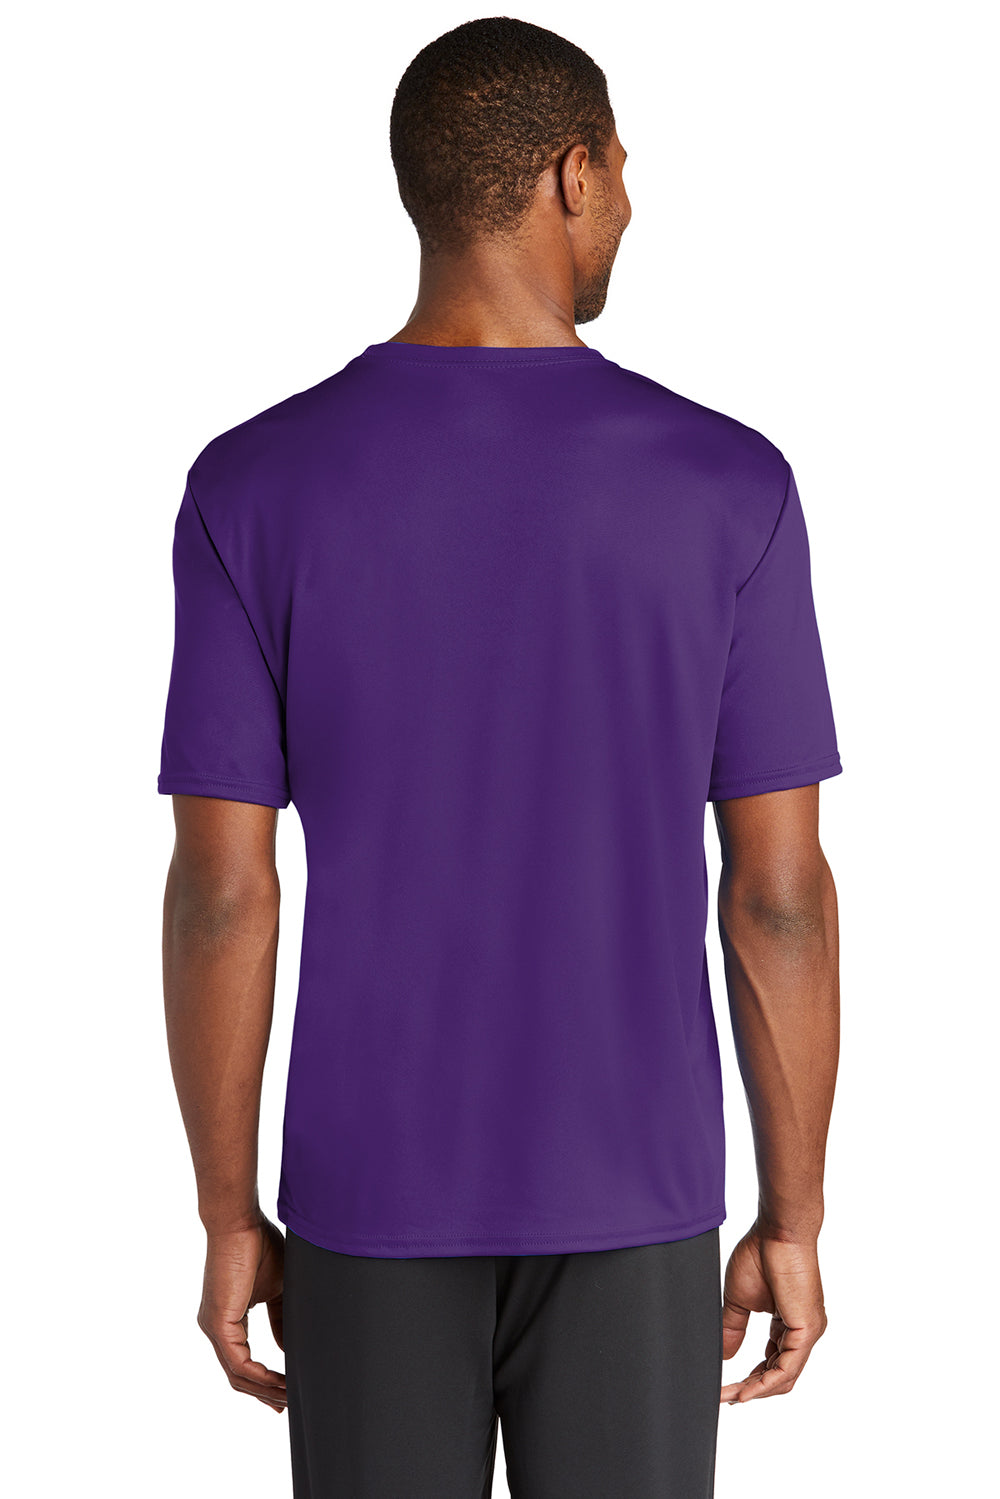 Port & Company PC380 Mens Dry Zone Performance Moisture Wicking Short Sleeve Crewneck T-Shirt Team Purple Back